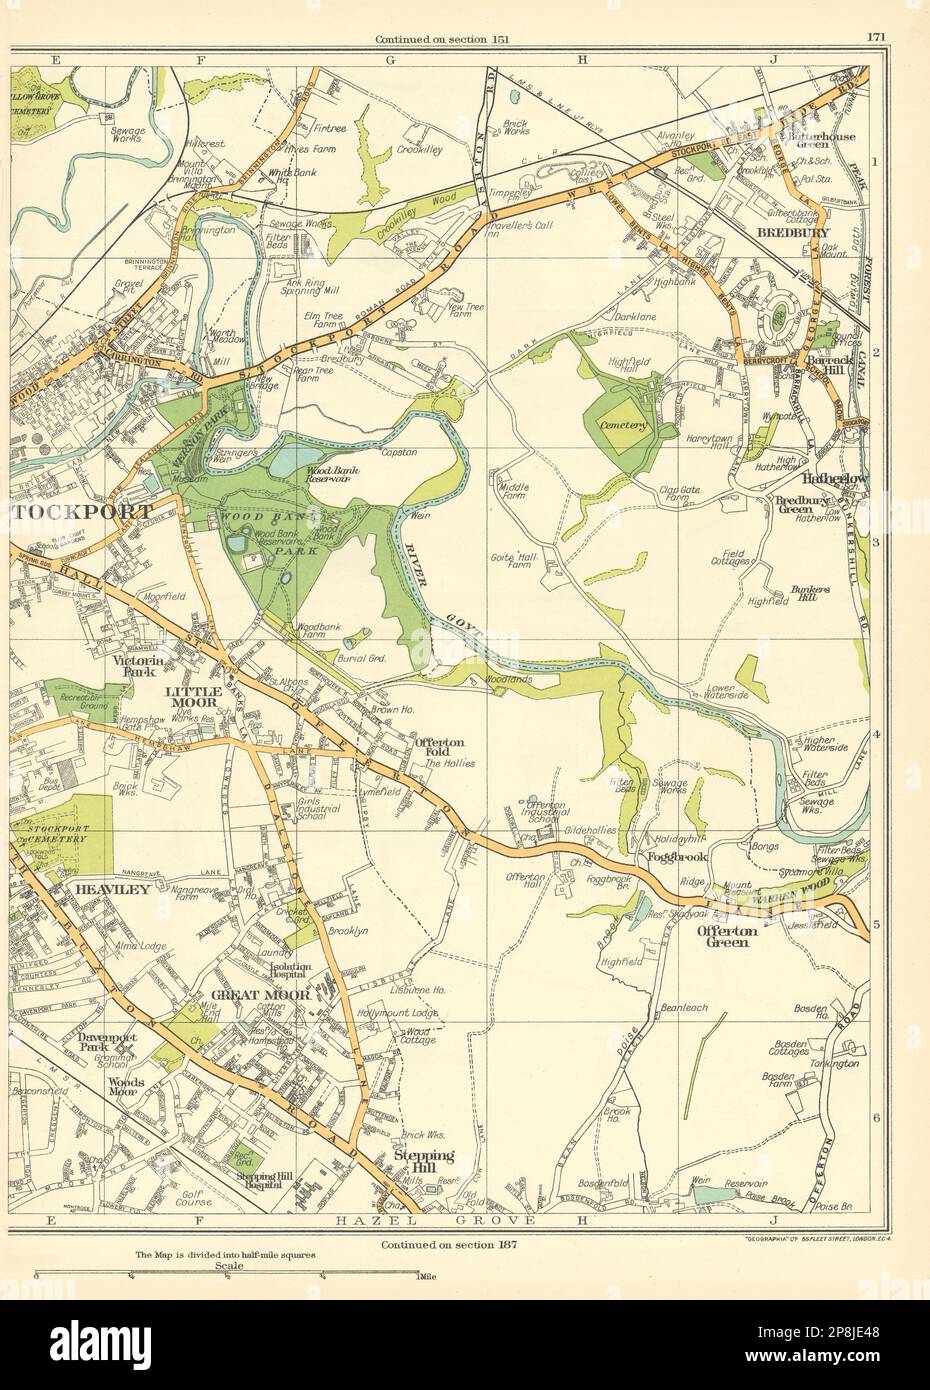 STOCKPORT Little Gt Moor Heaviley Stepping Hill Bredbury Offerton Grn 1935 map Stock Photo